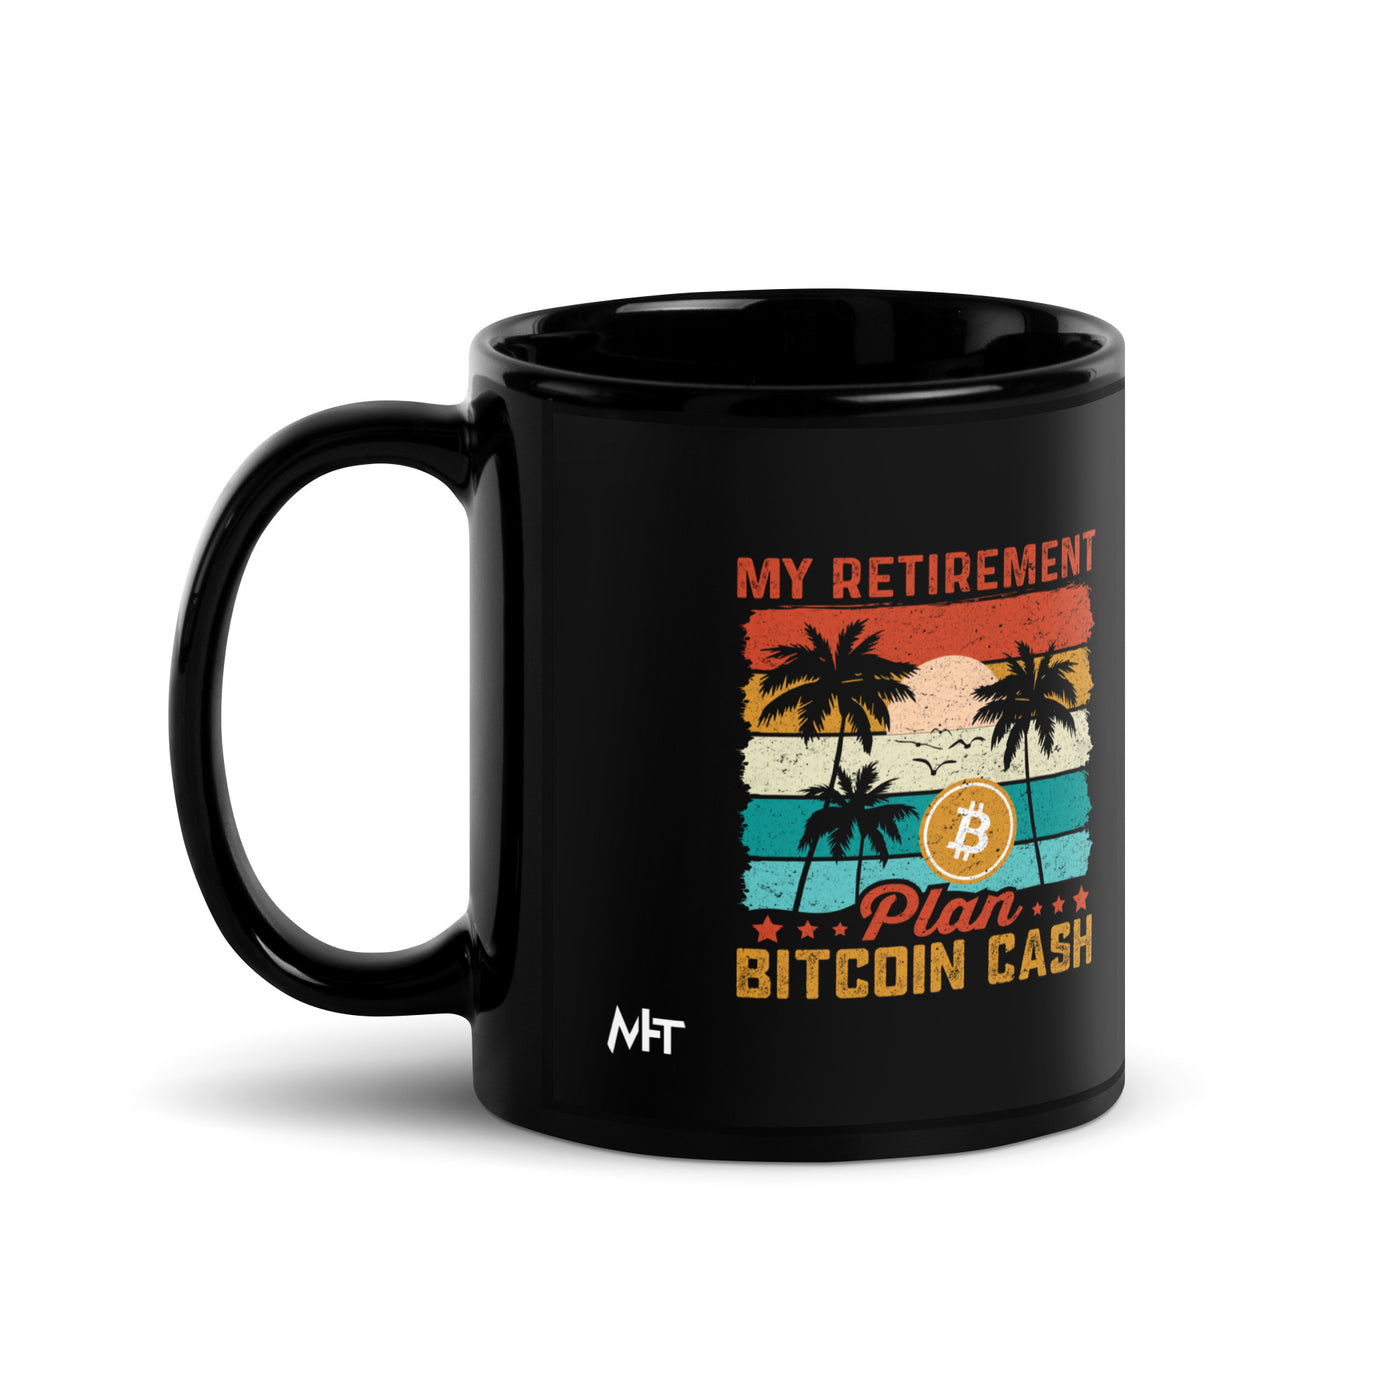 My Retirement Plan: Bitcoin Cash - Black Glossy Mug